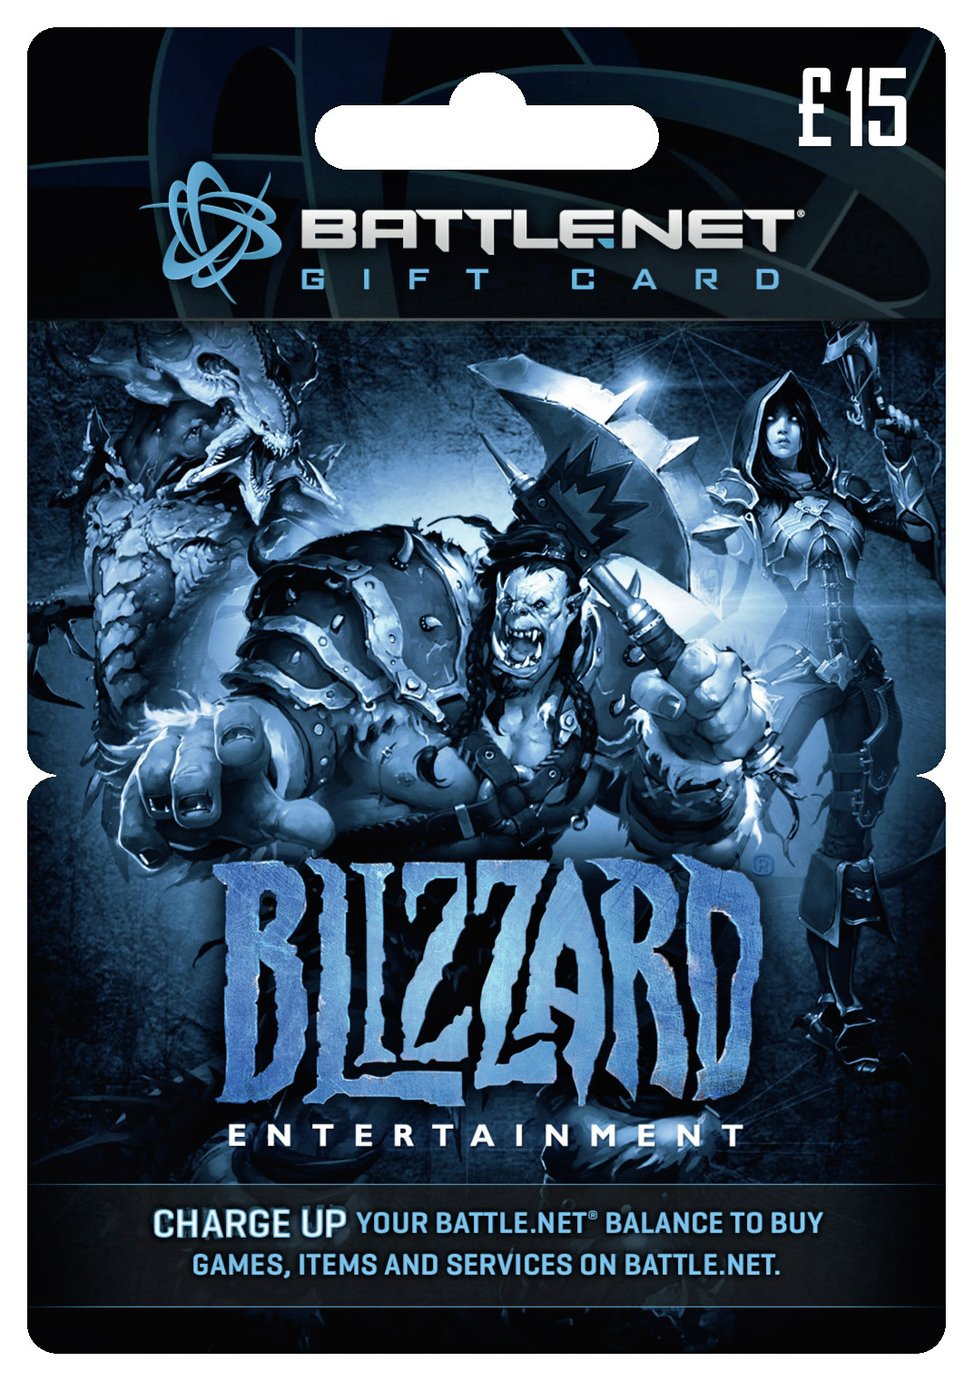 Blizzard BATTLE.NET ¬£15 Gift Card Review